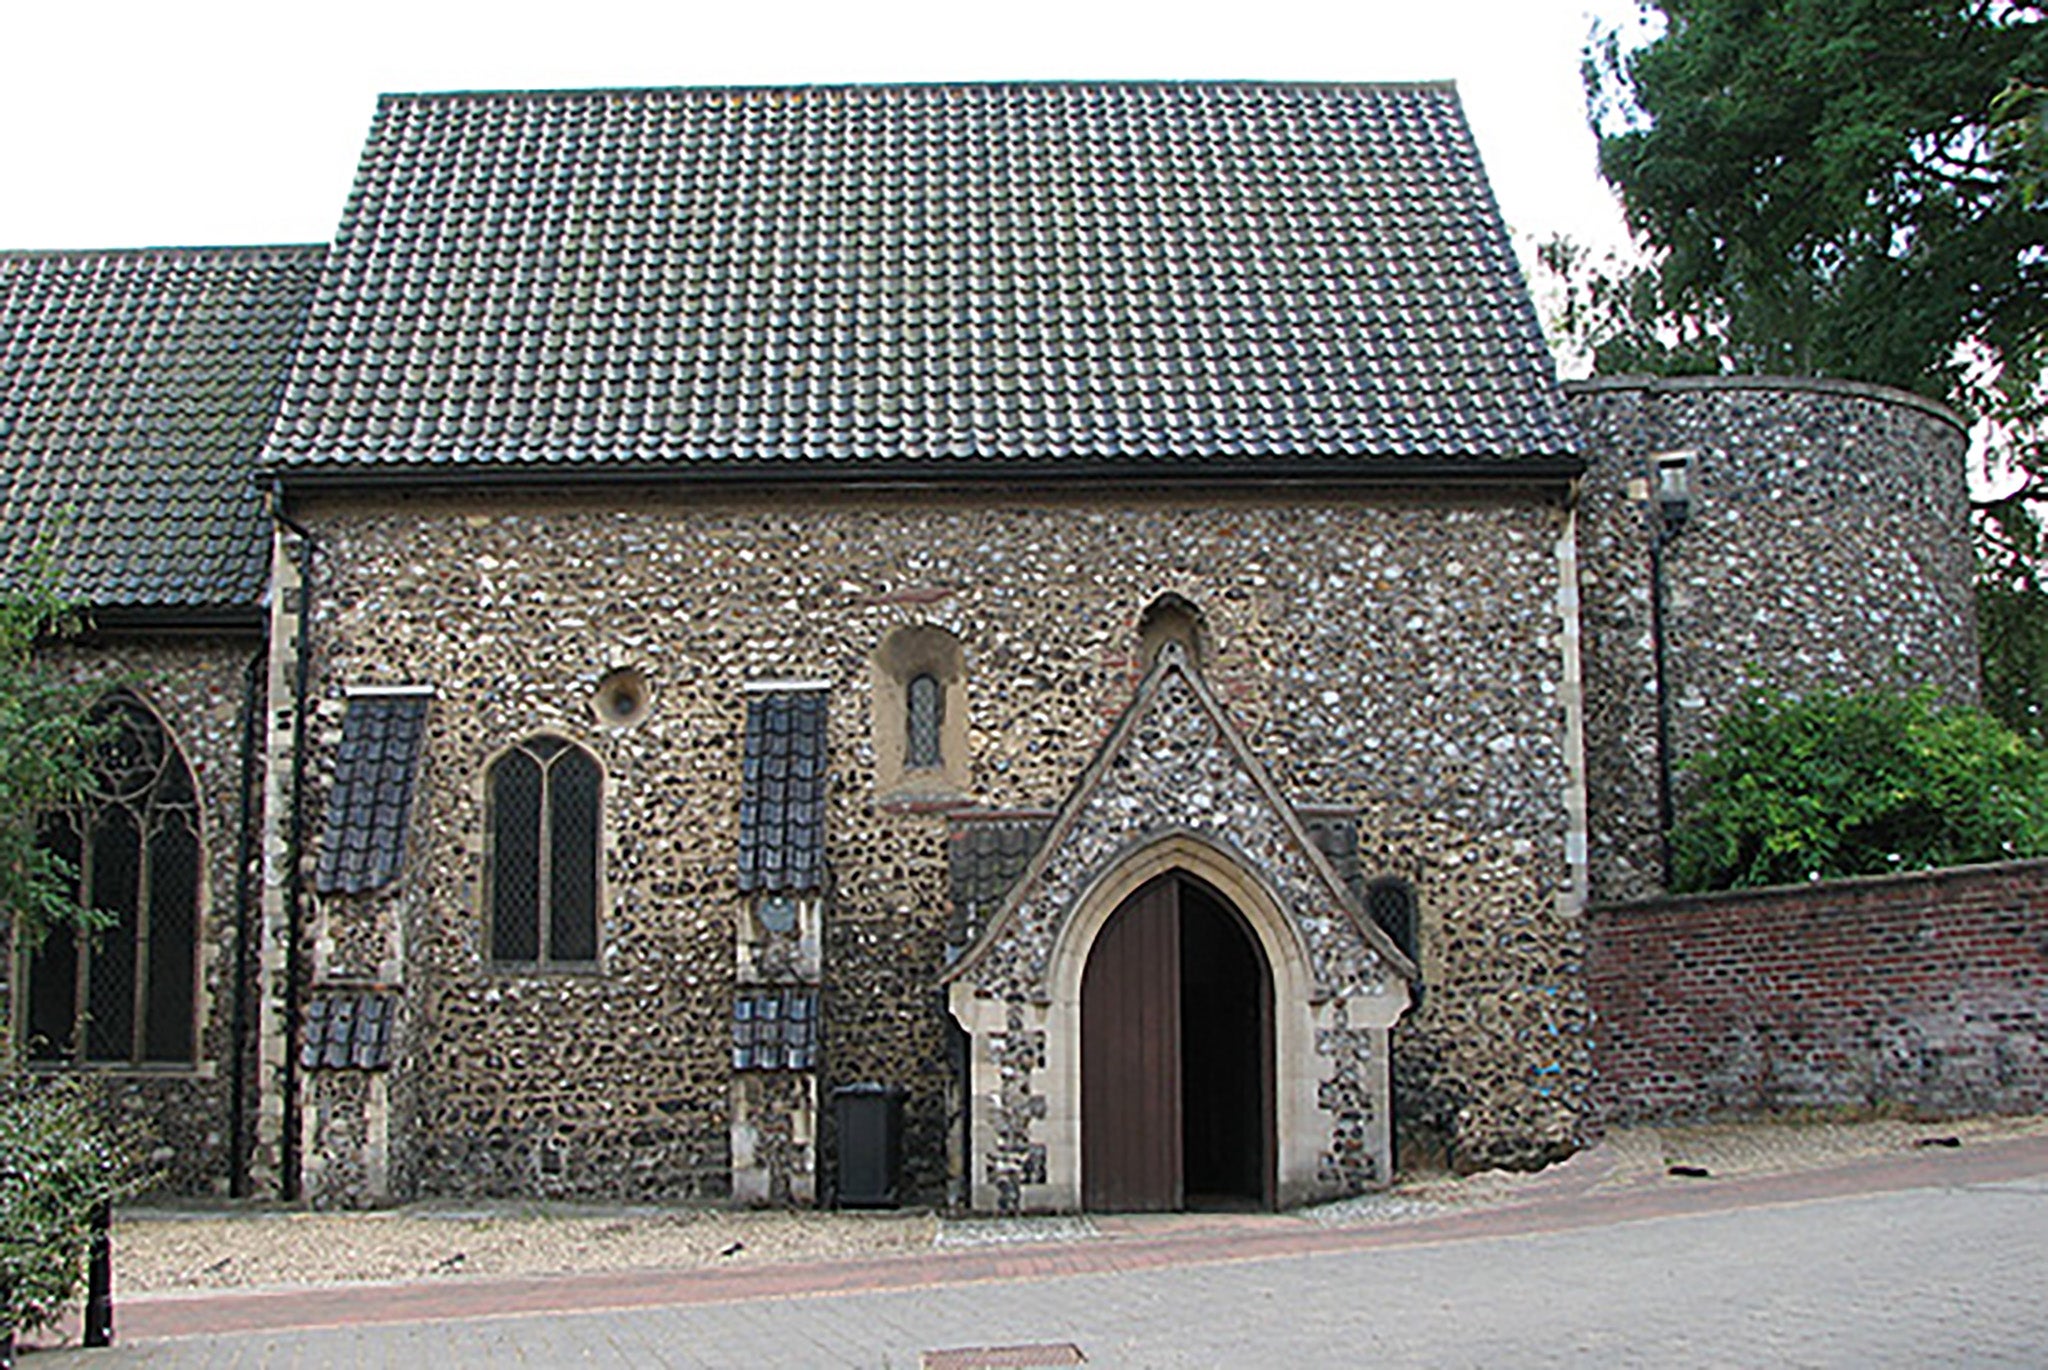 St Julian's church, where Julian of Norwich once lived